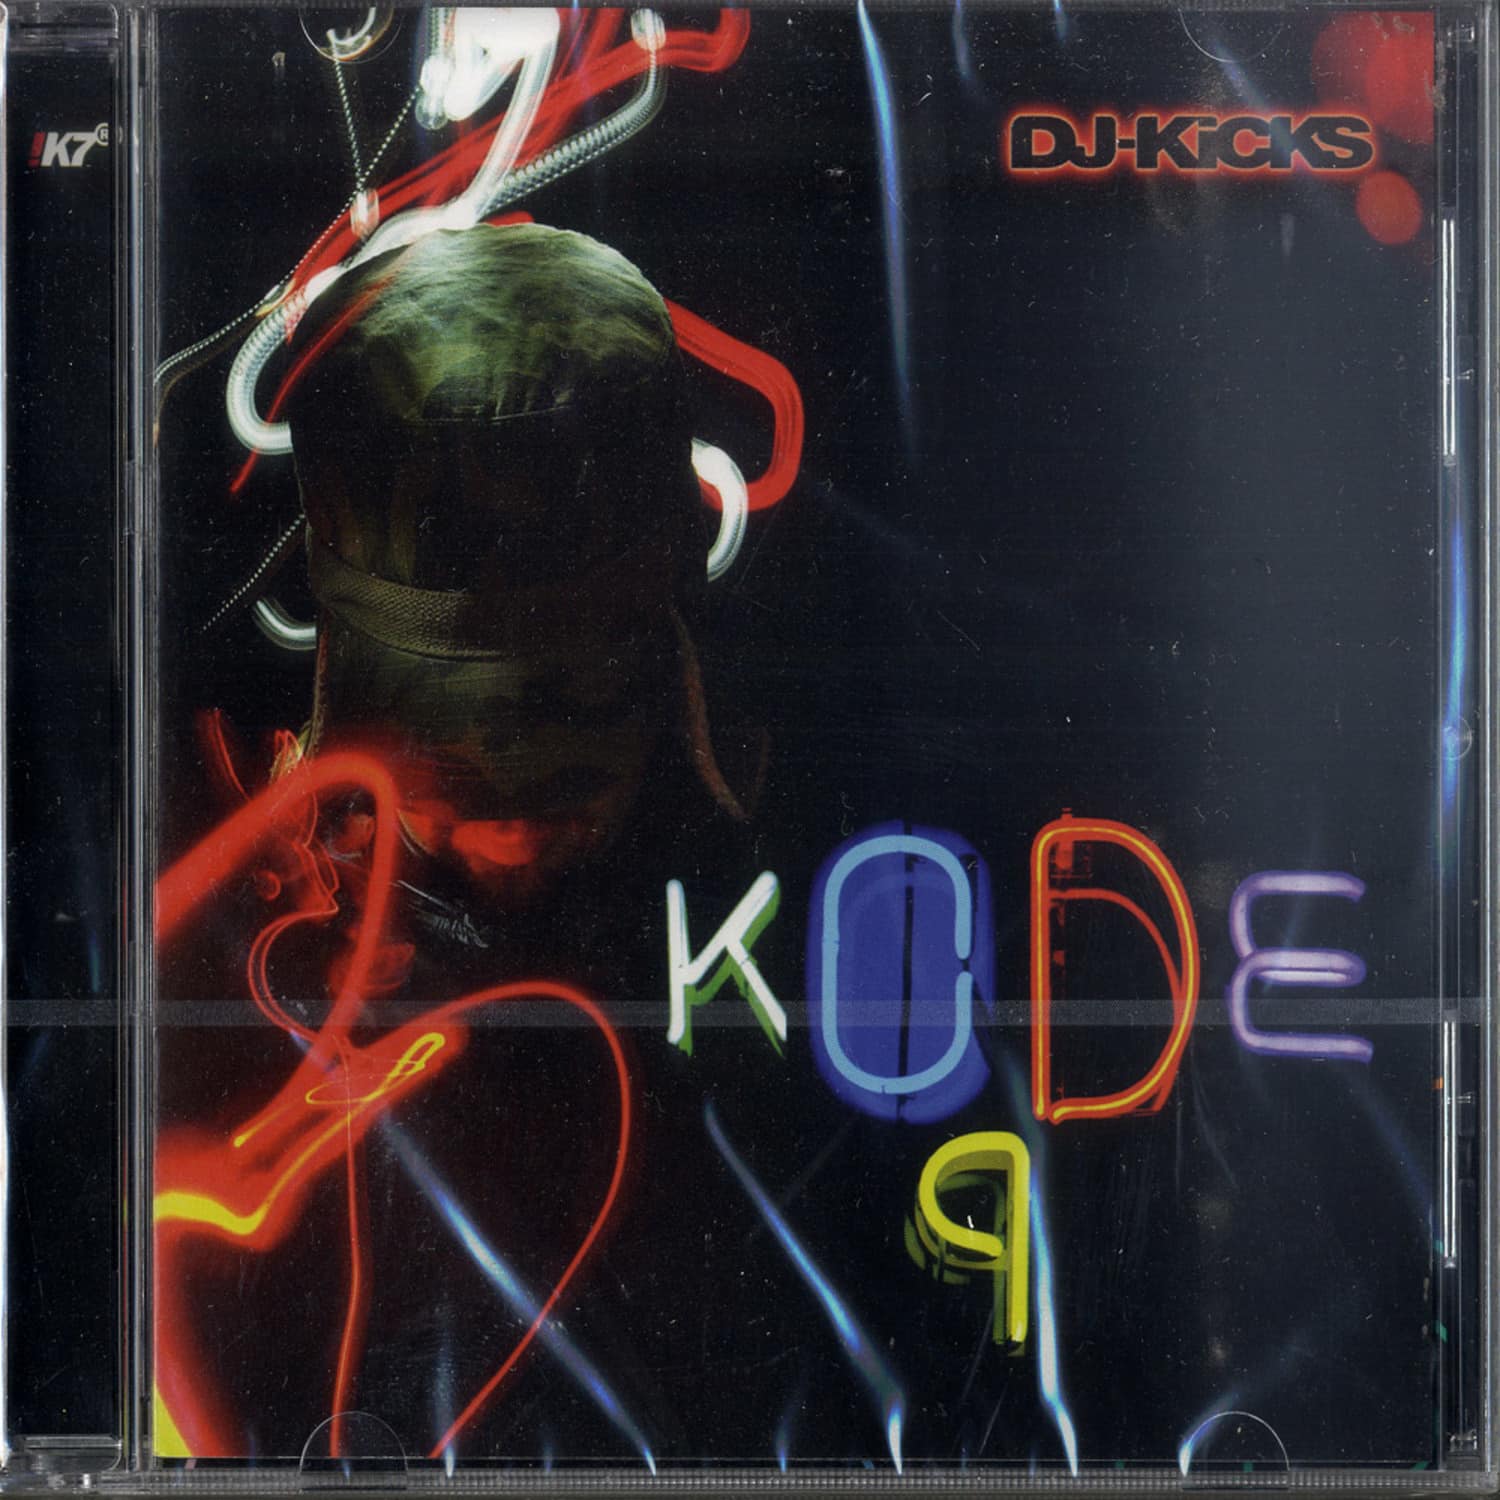 Kode9 - DJ-KICKS 